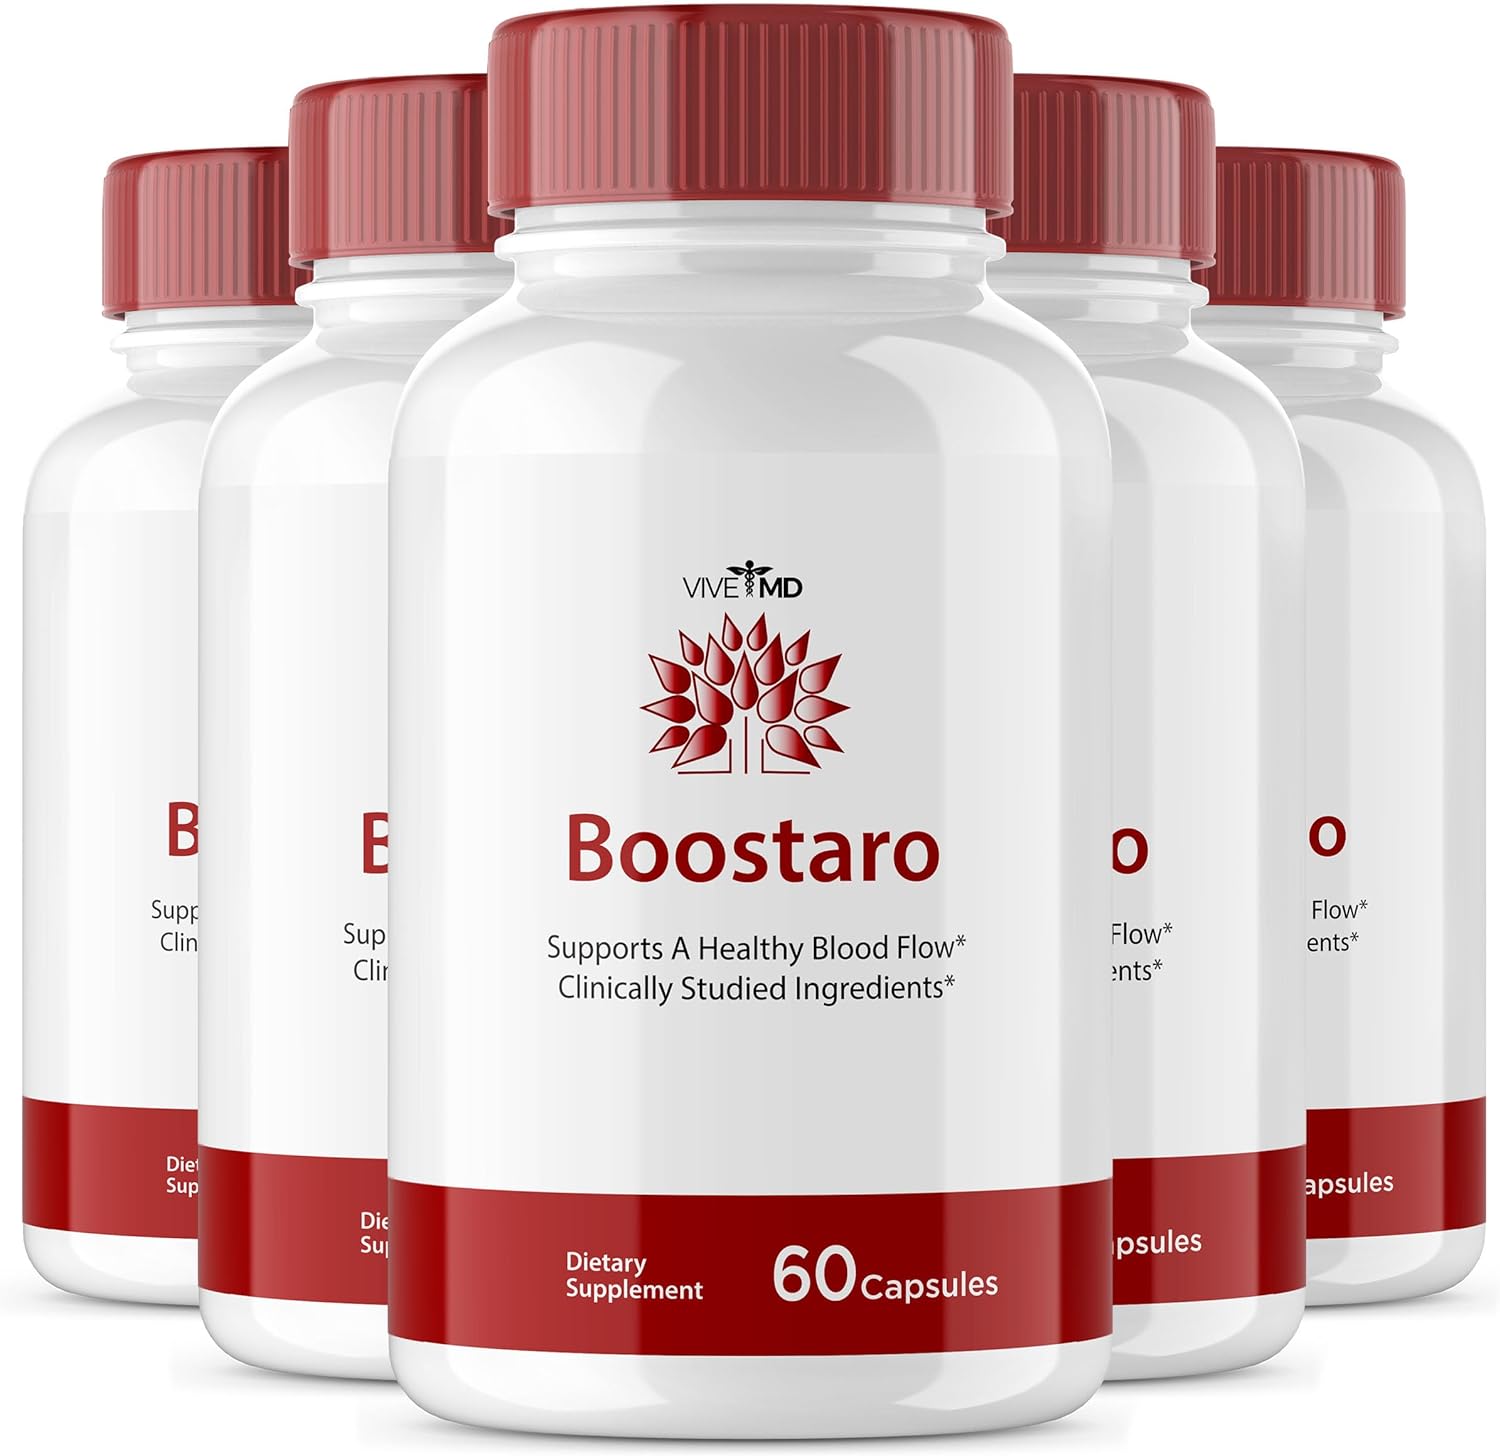 VIVE MD Boostaro ed Pills Advanced Formula Supplement - Maximum Strength Blood Flow Support Formula, Boostaroo Supplement for Healthy Blood Flow